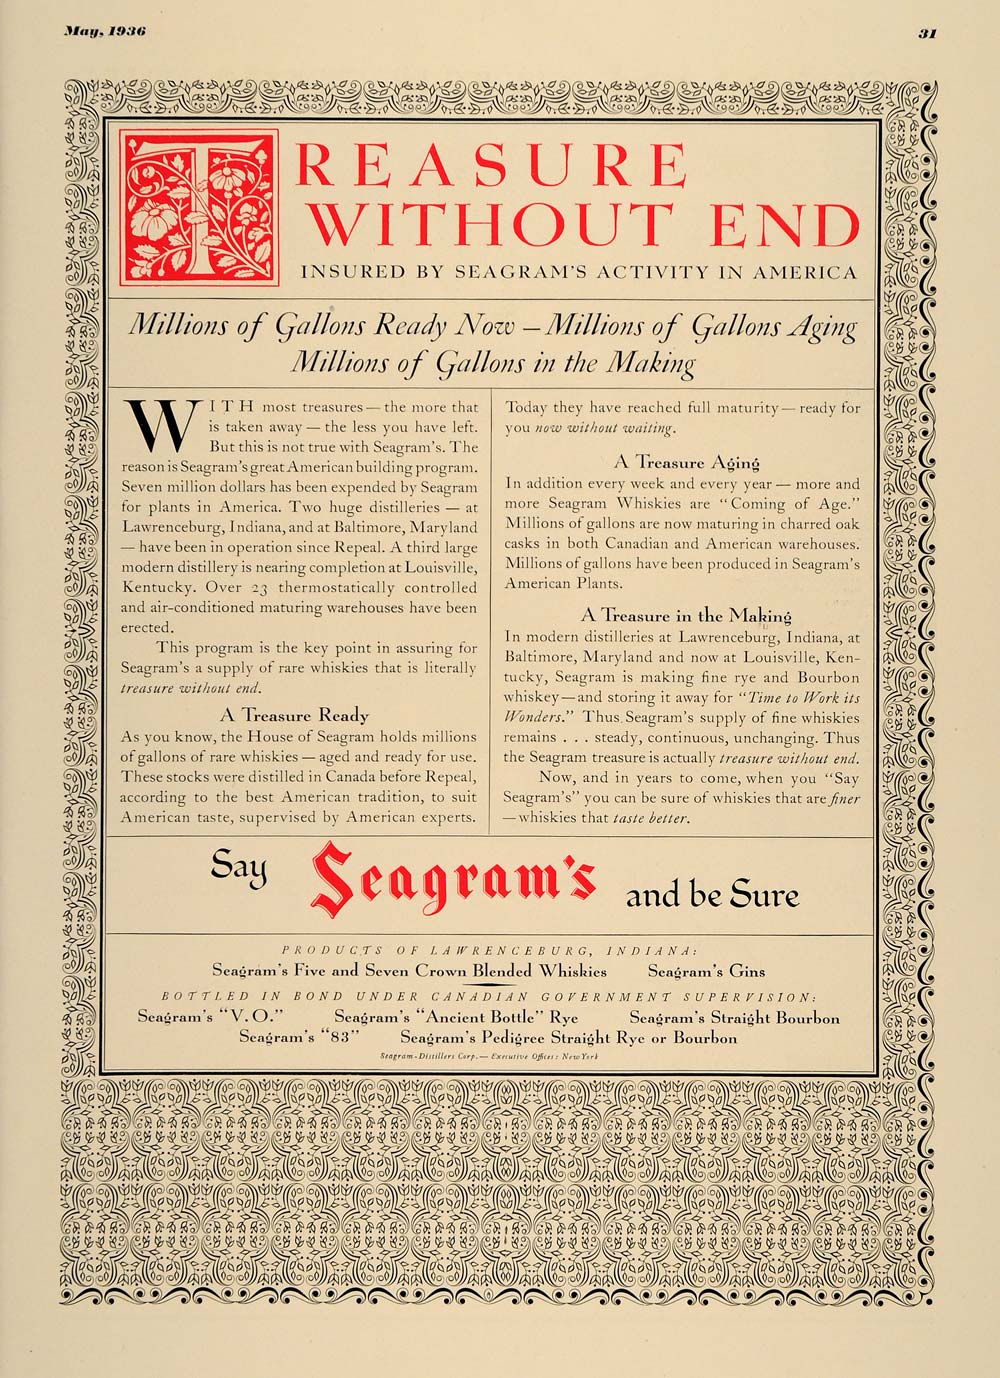 1936 Ad Seagrams Treasure Without End Lawrenceburg Ind. - ORIGINAL ESQ2